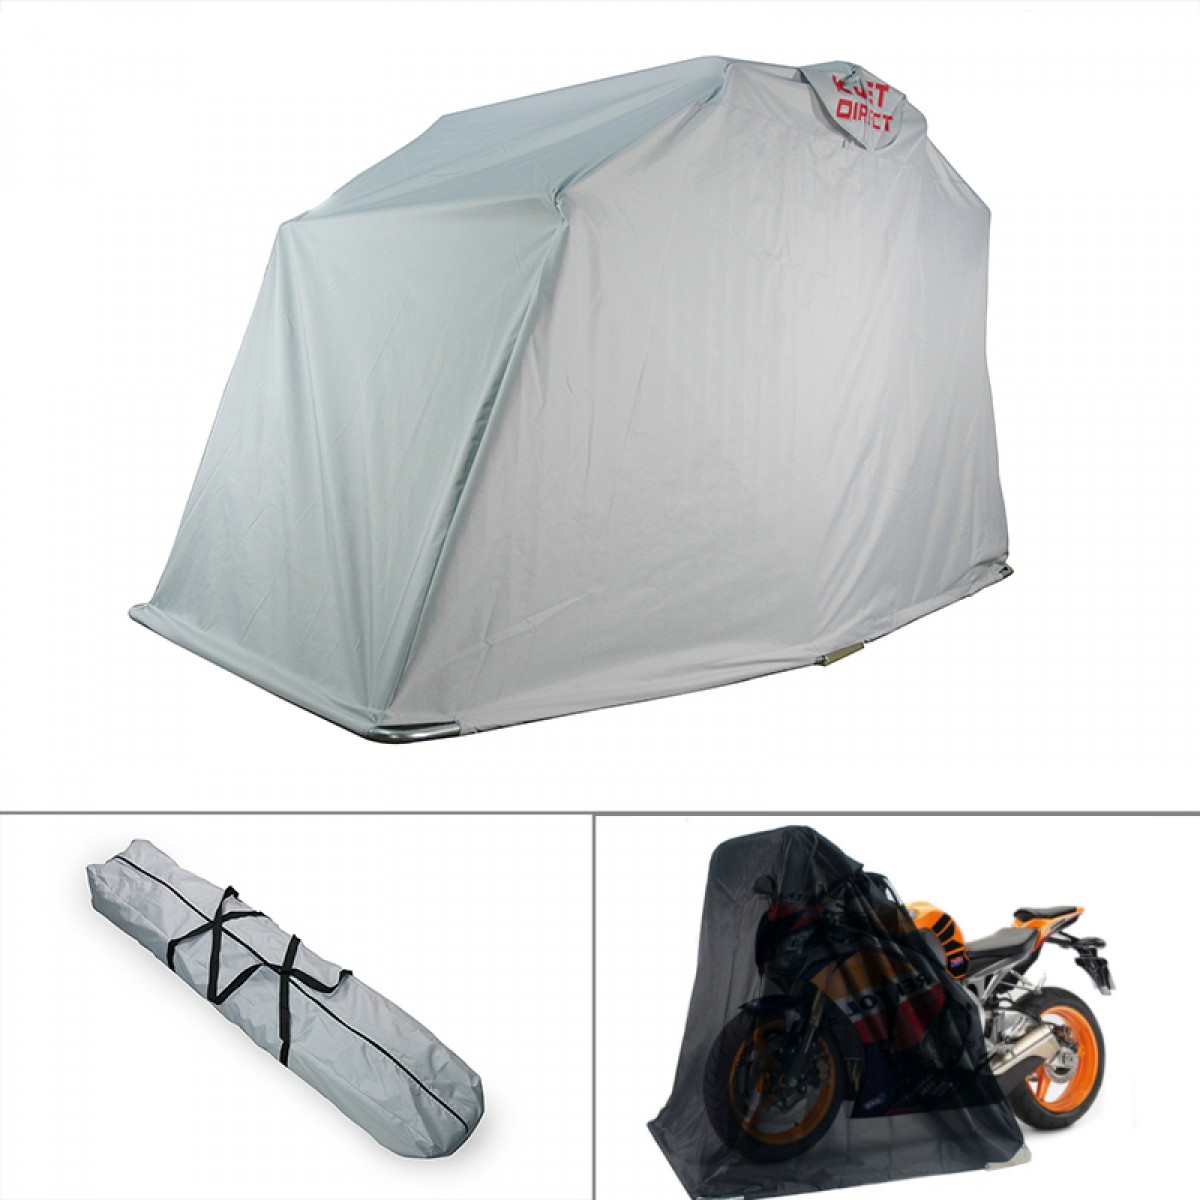 Audi Q3 Tent Camping